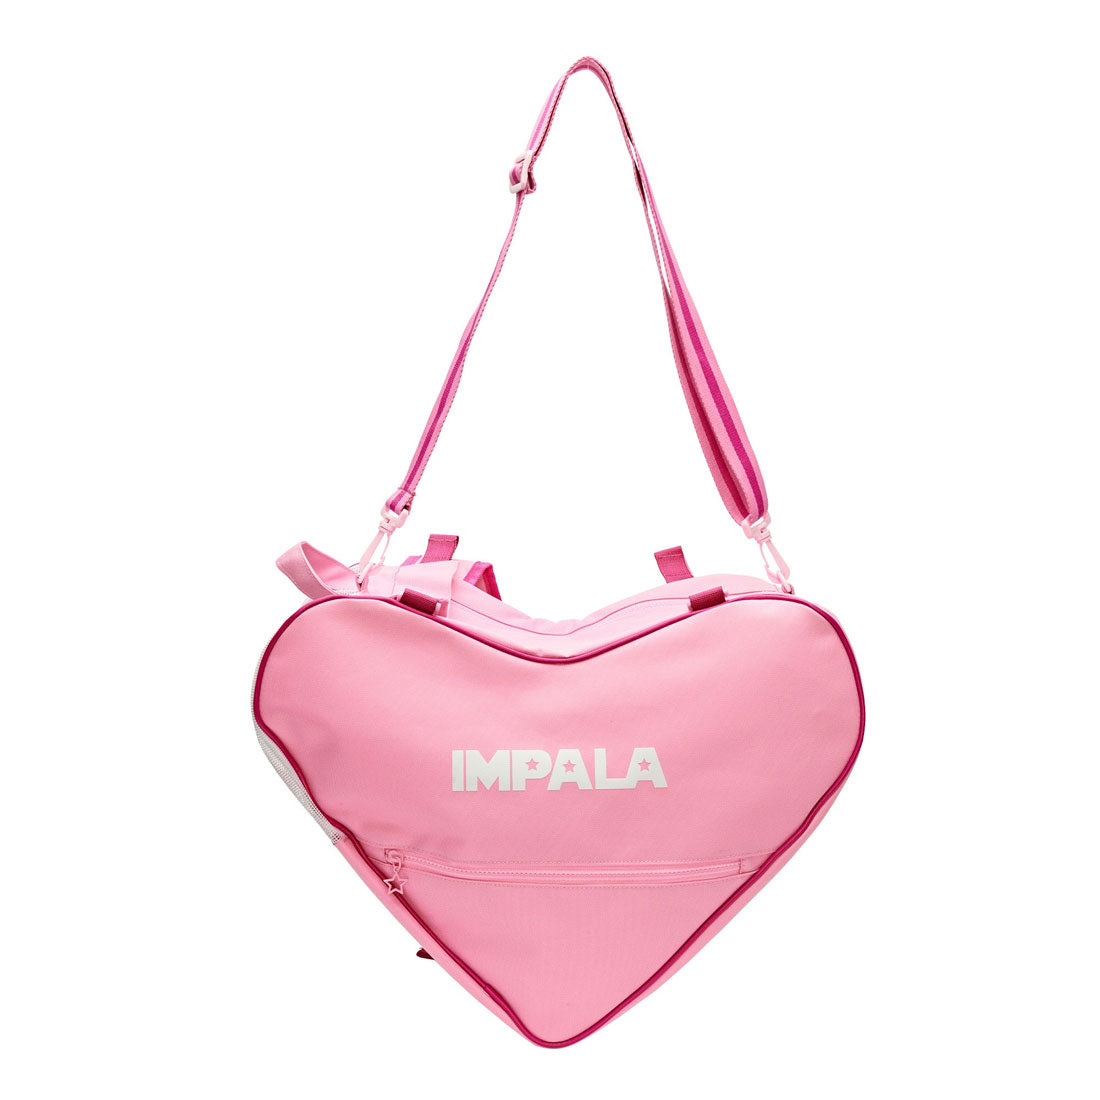 Impala Skate Bag - Pink Bags and Backpacks